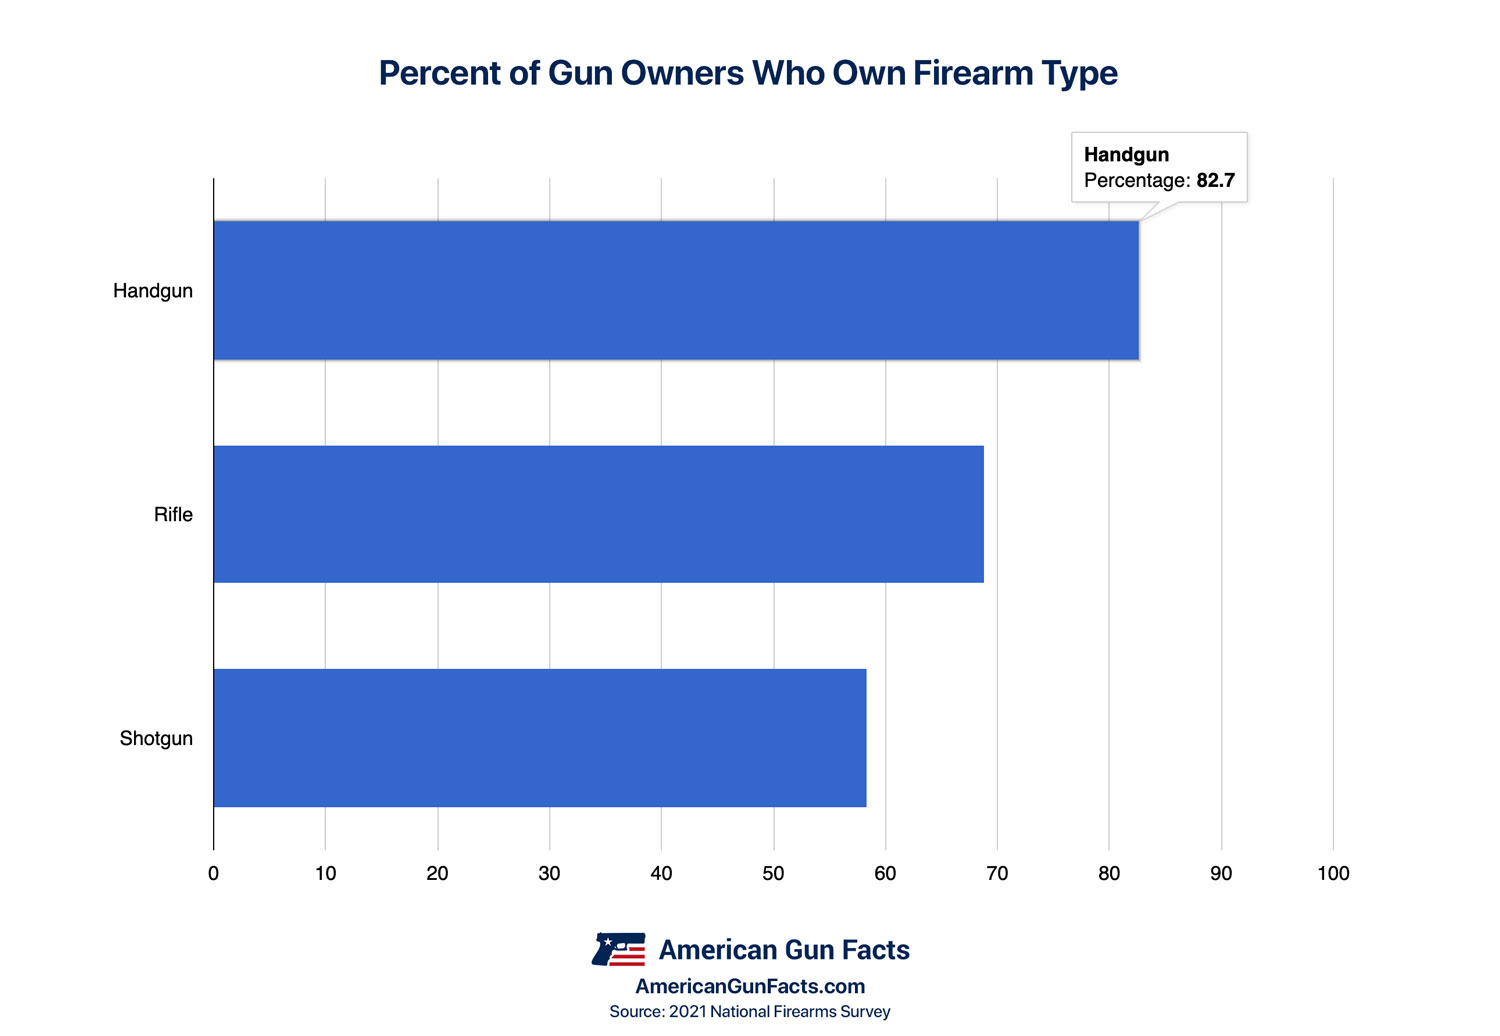 Percent of gun owners who own handguns, rifles, and shotguns